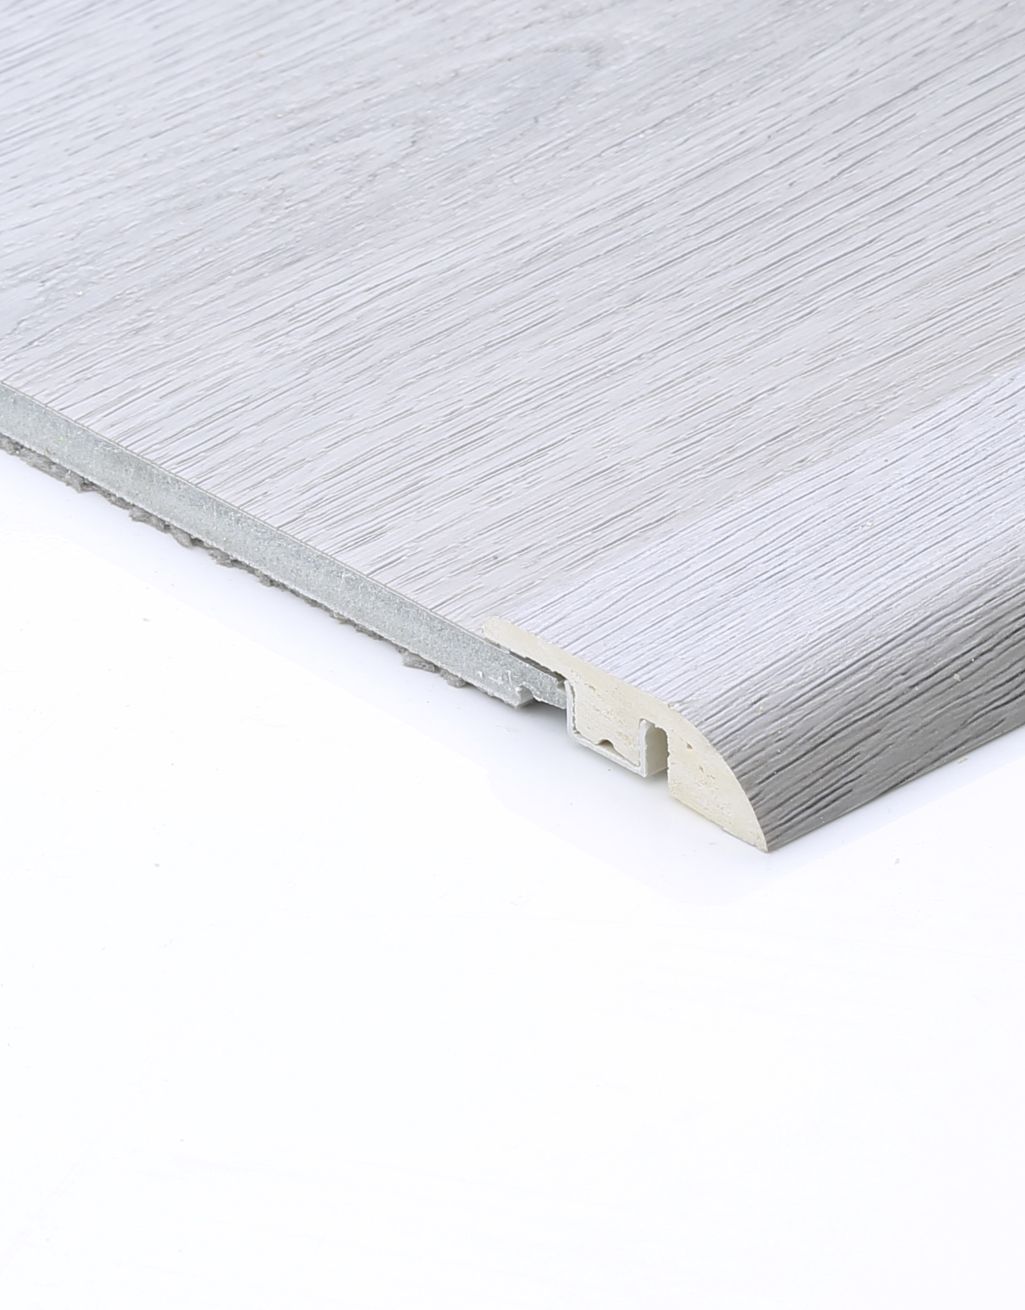 Evocore Shoreline Grey Oak Ramp Profile | Direct Wood Flooring